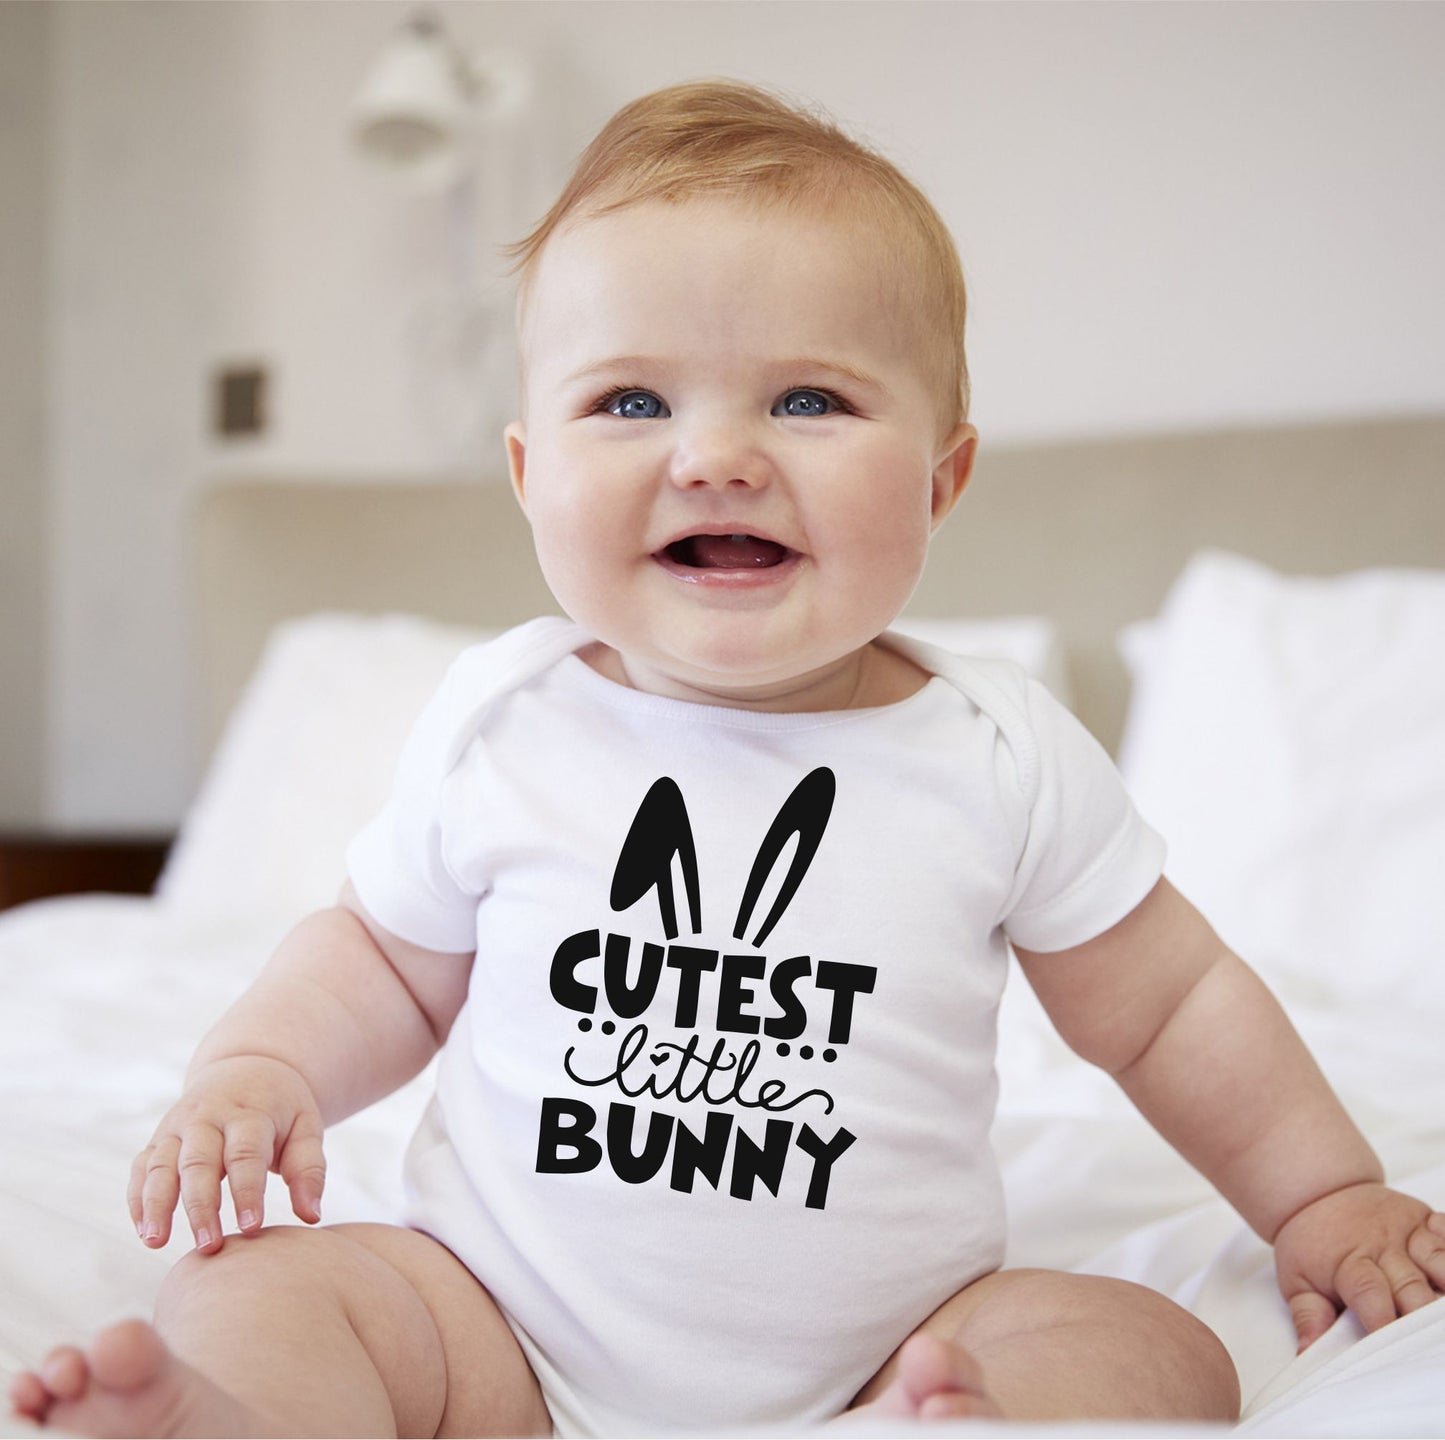 Baby Statement Onesies - Cutest Little Bunny